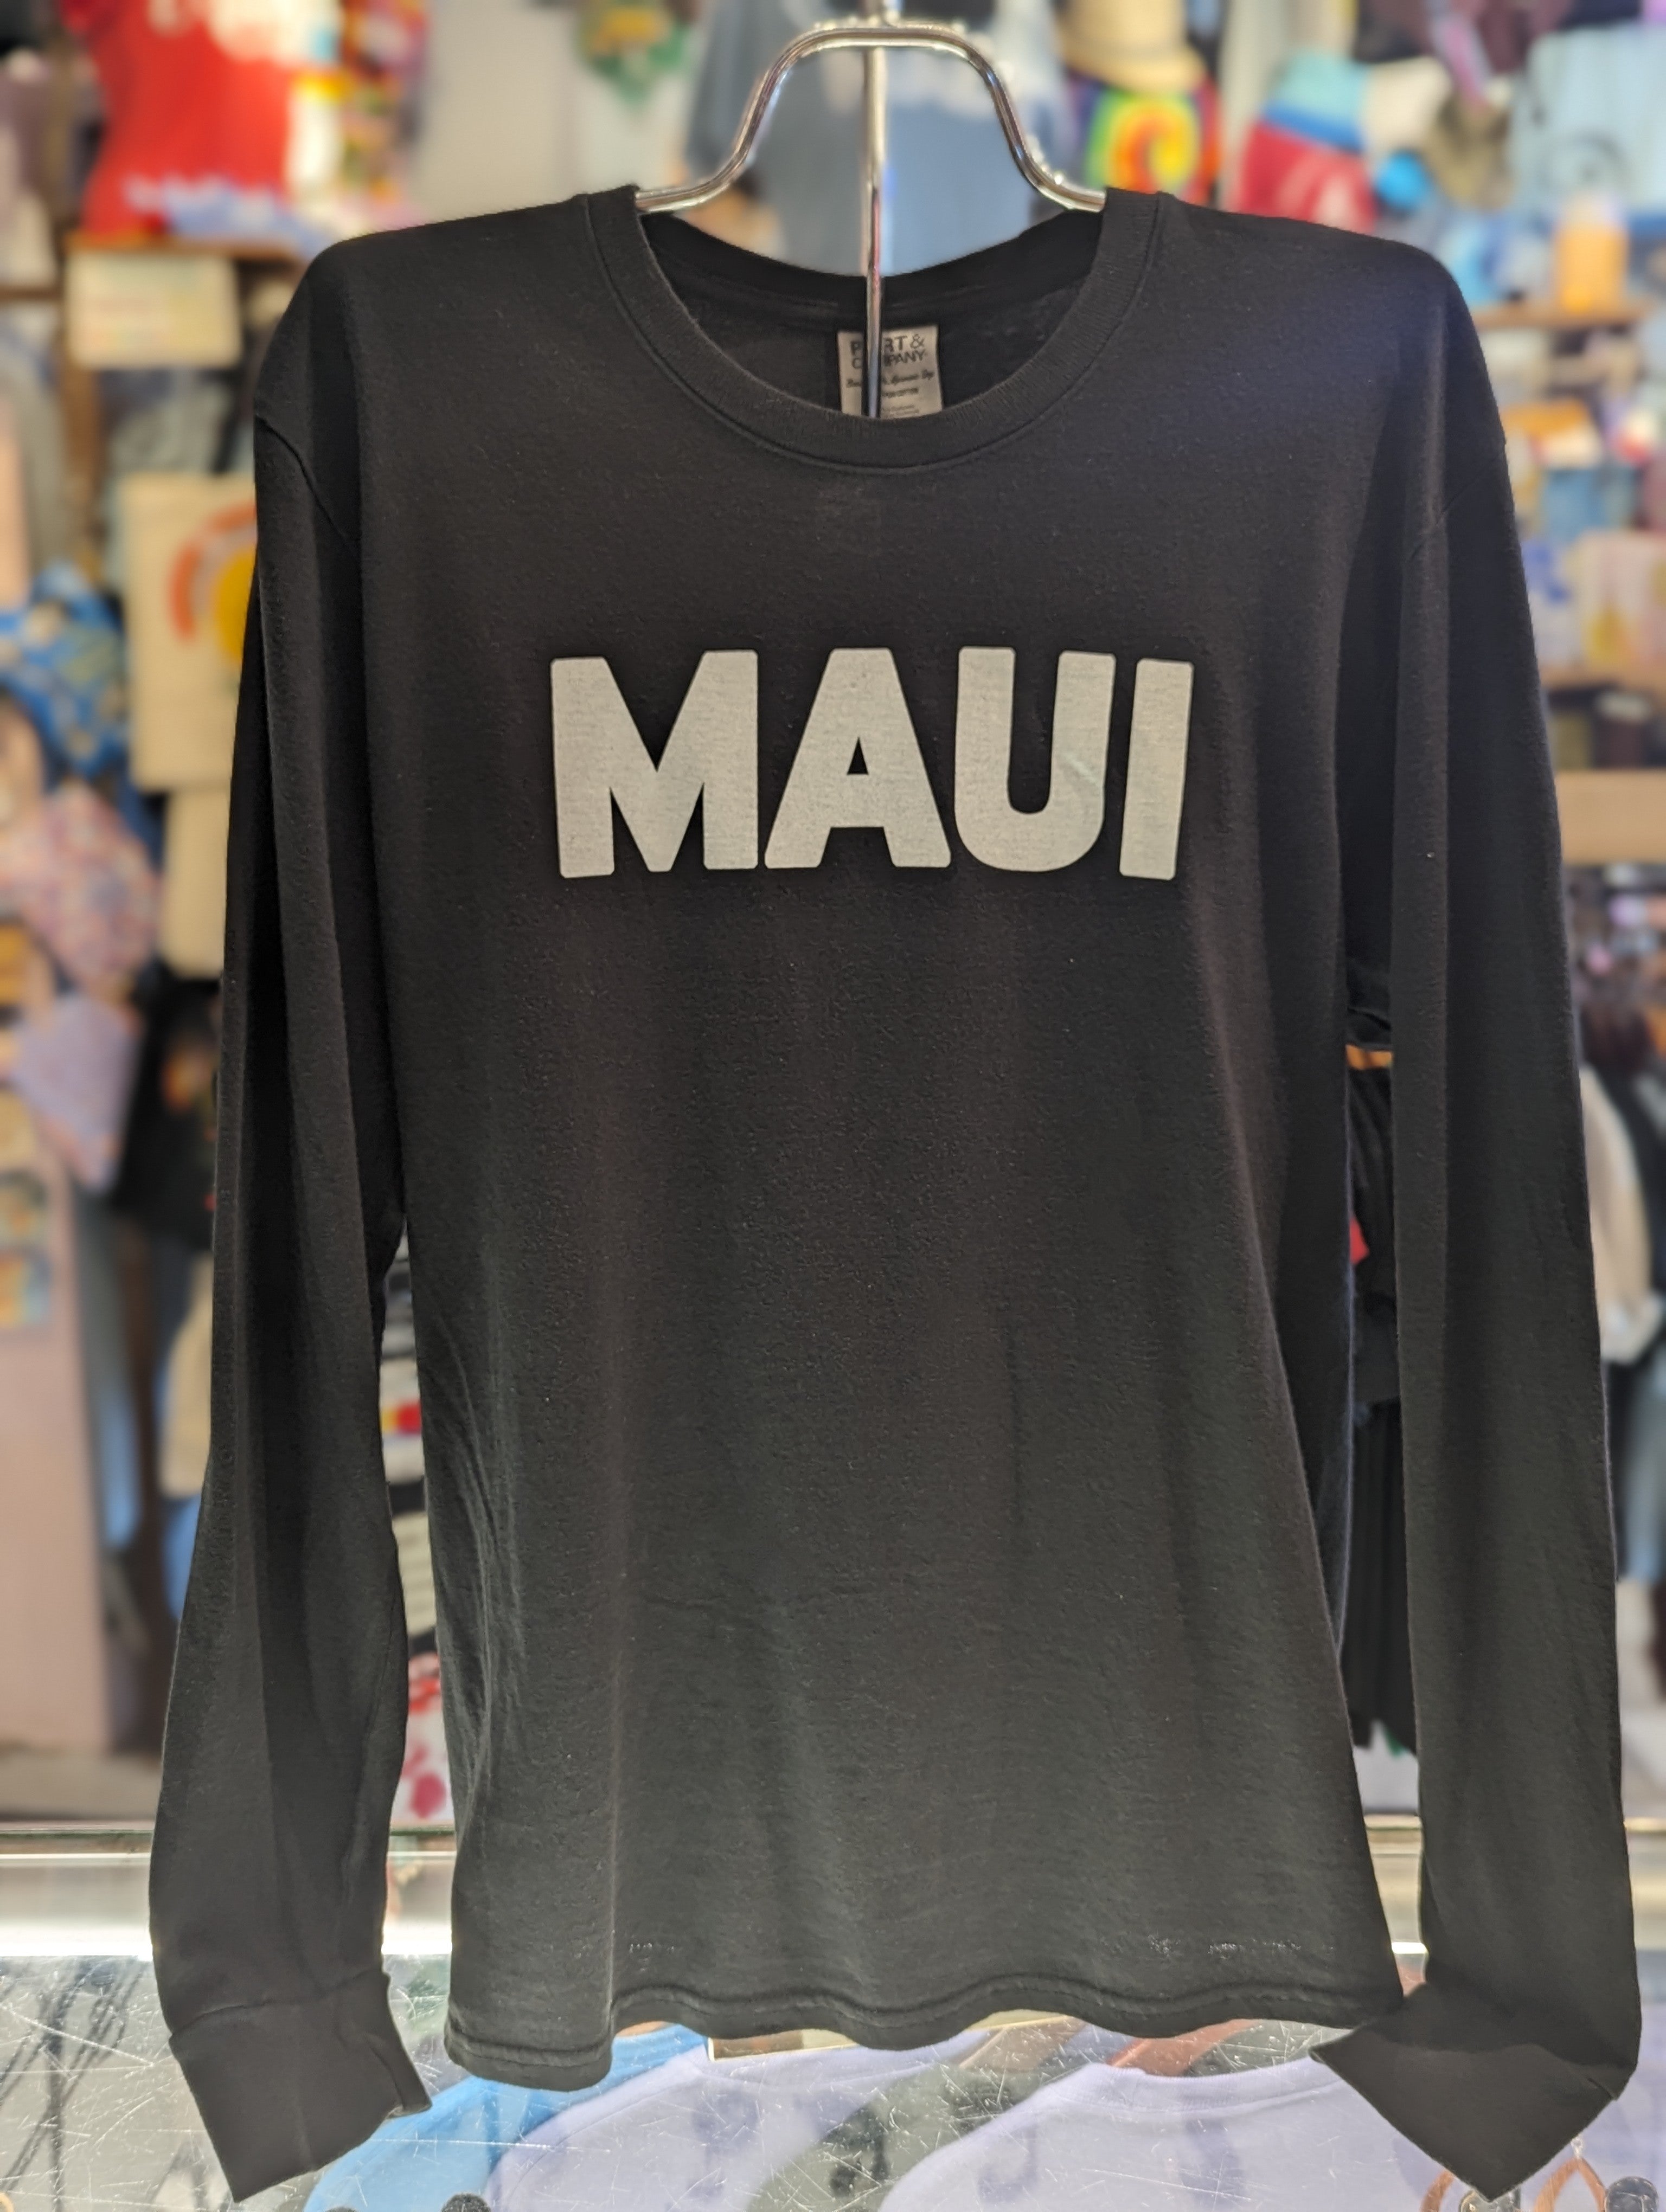 Men's Long-Sleeve Black "Maui" Shirt